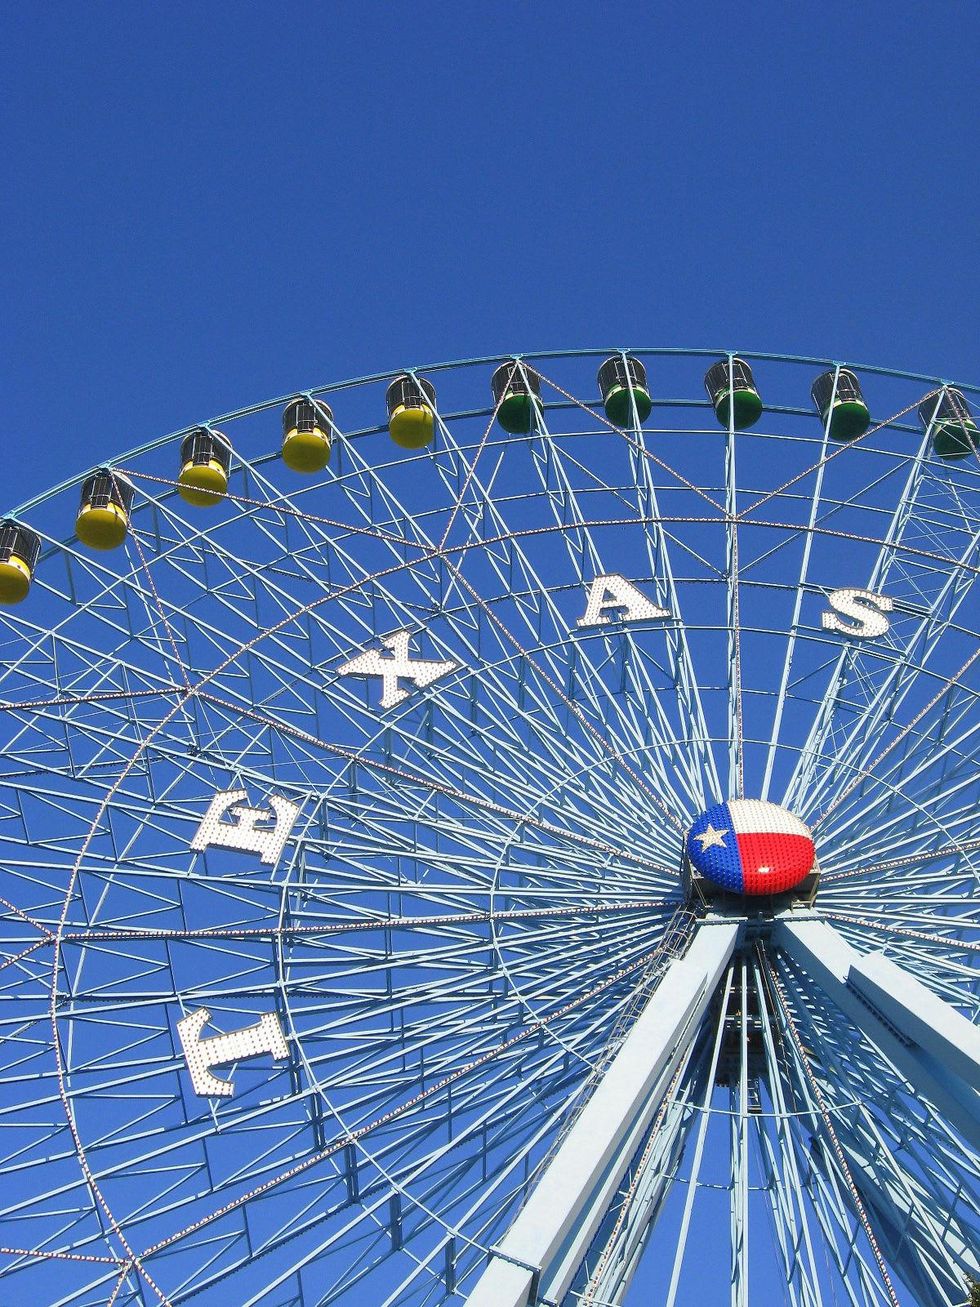 Texas Star Ferris wheel